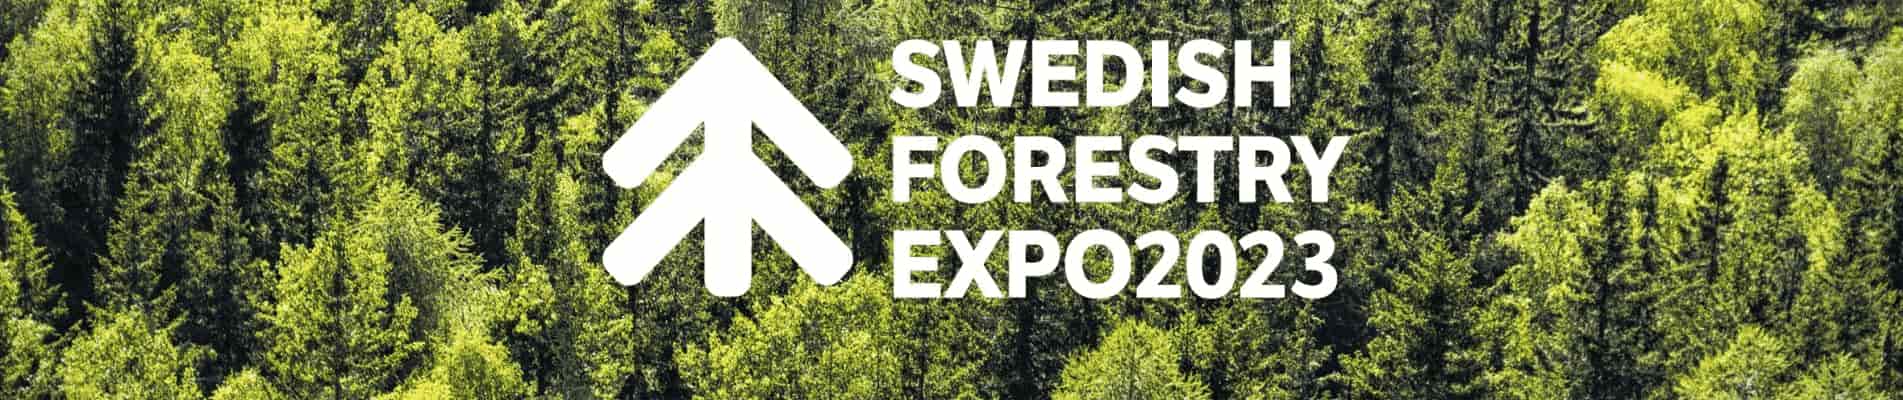 Swedish Forestry Expo - NAF Neunkirchener Achsenfabrik